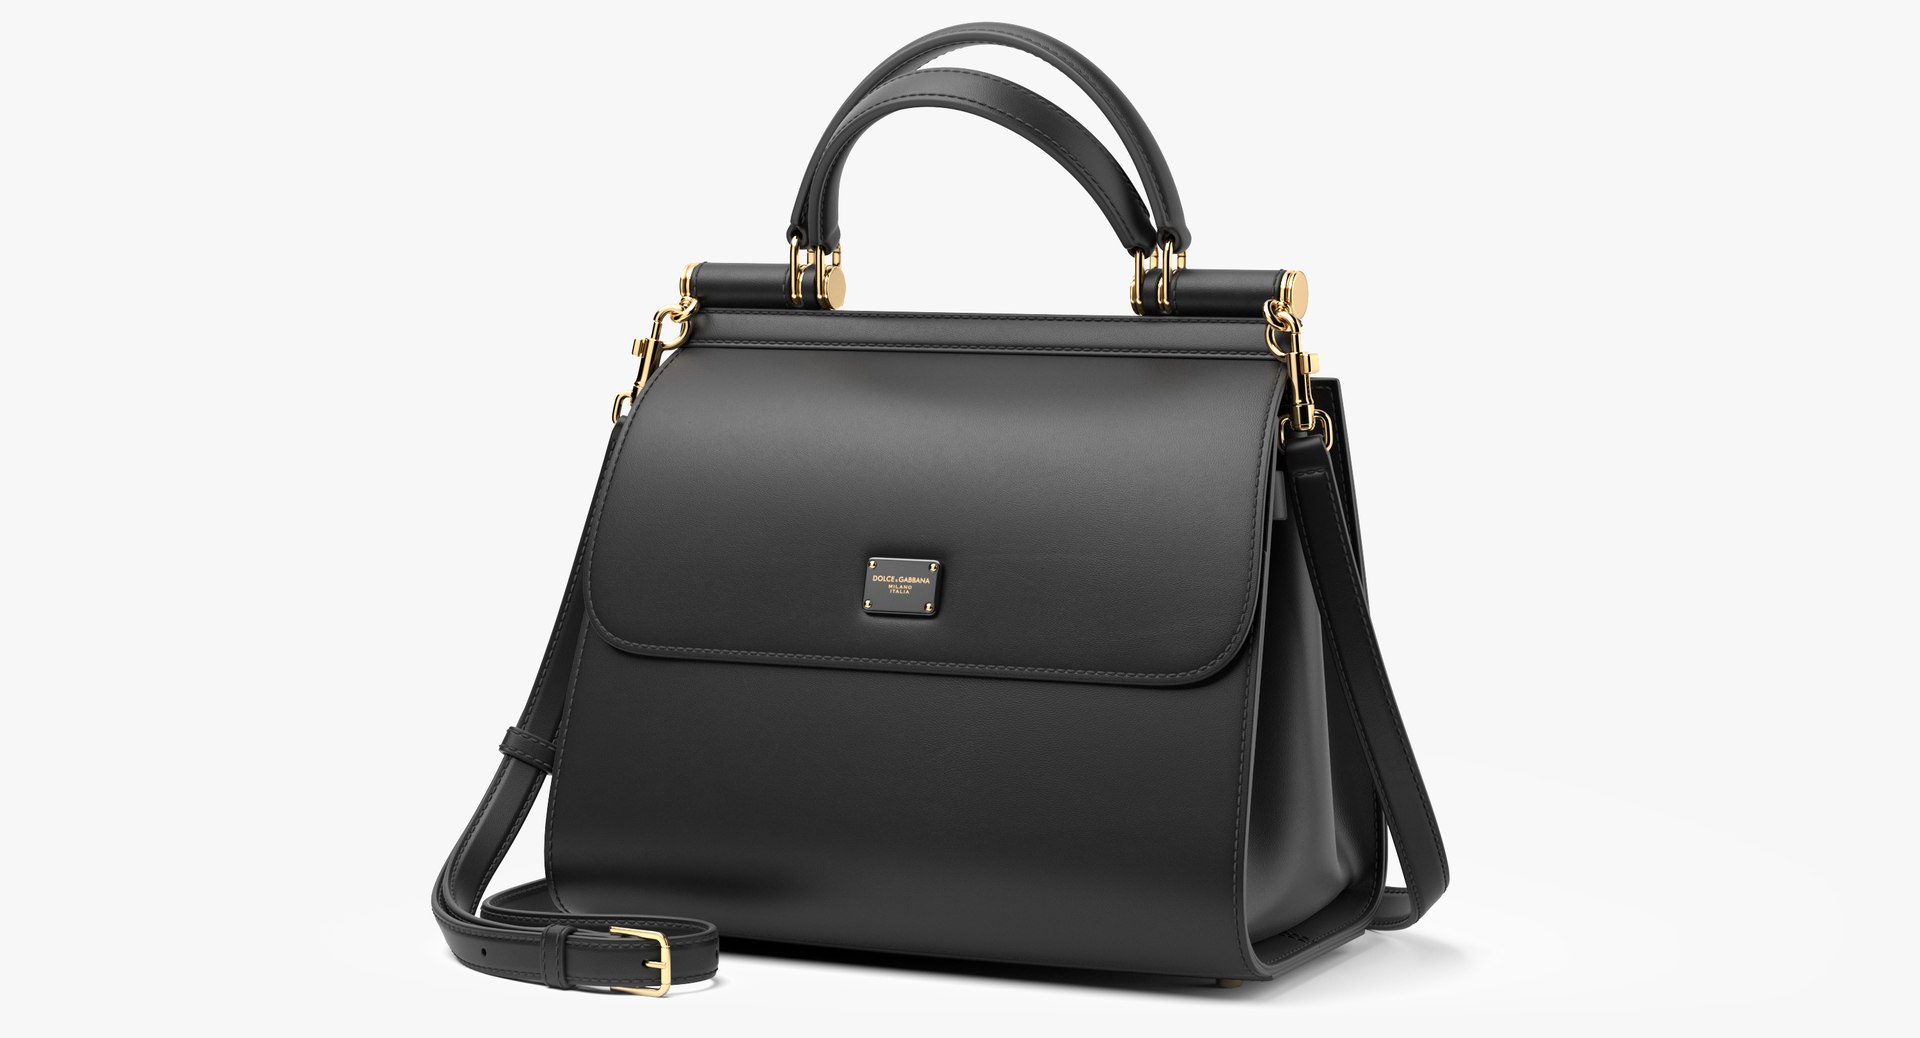 Dolce Gabbana Original Sicily Bag with Top Handle Black Leather